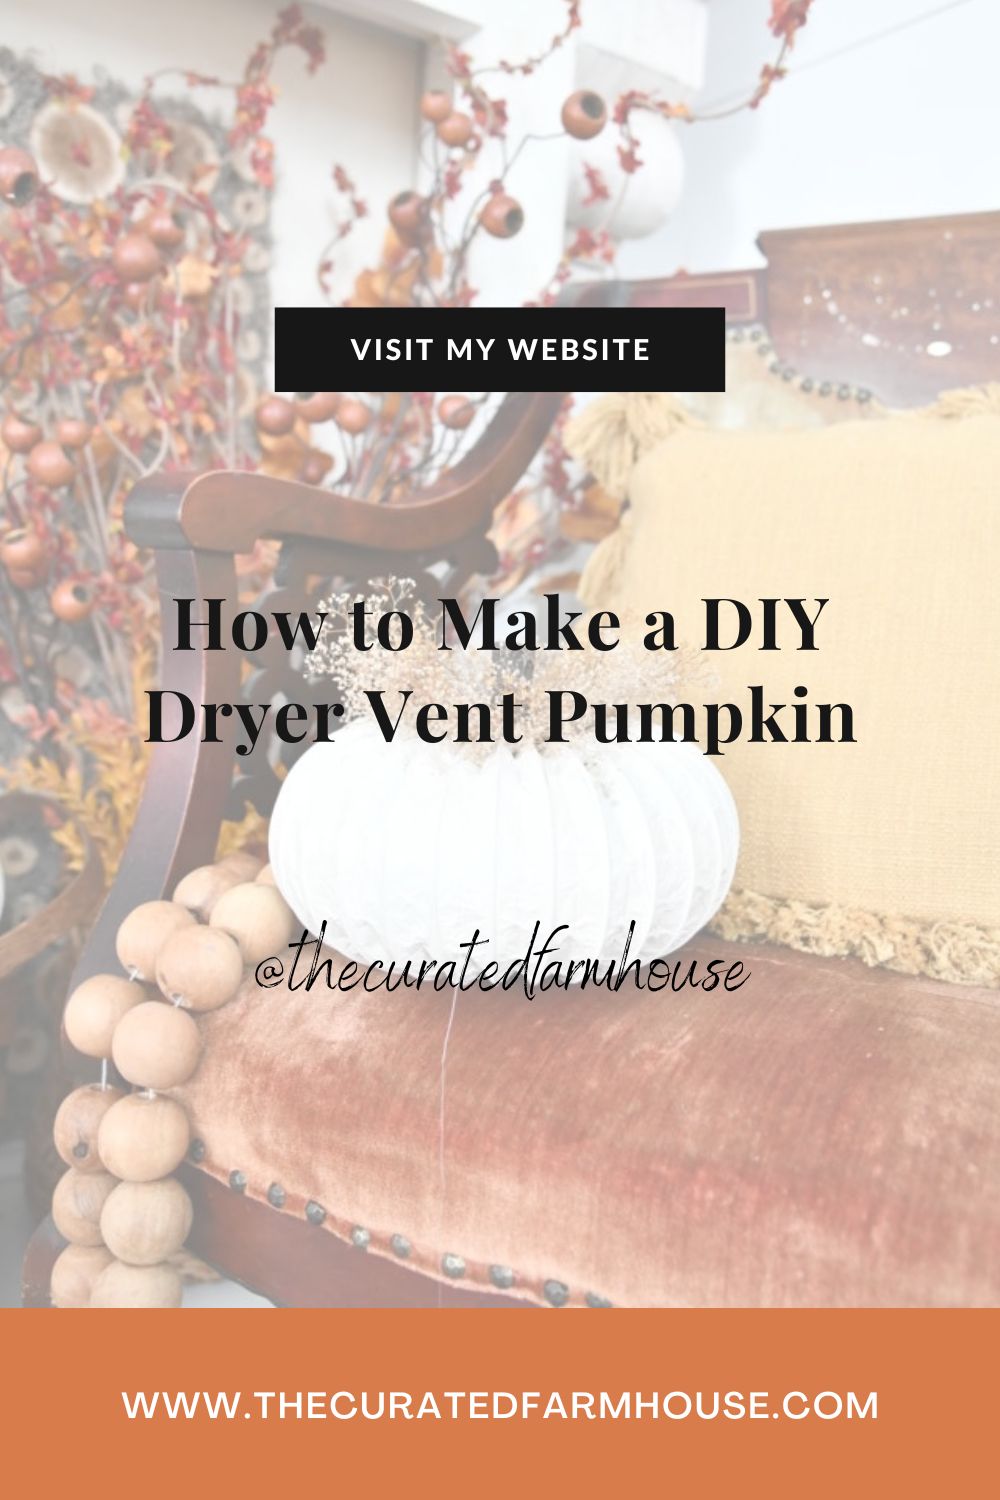 How to Make a DIY Dryer Vent Pumpkin